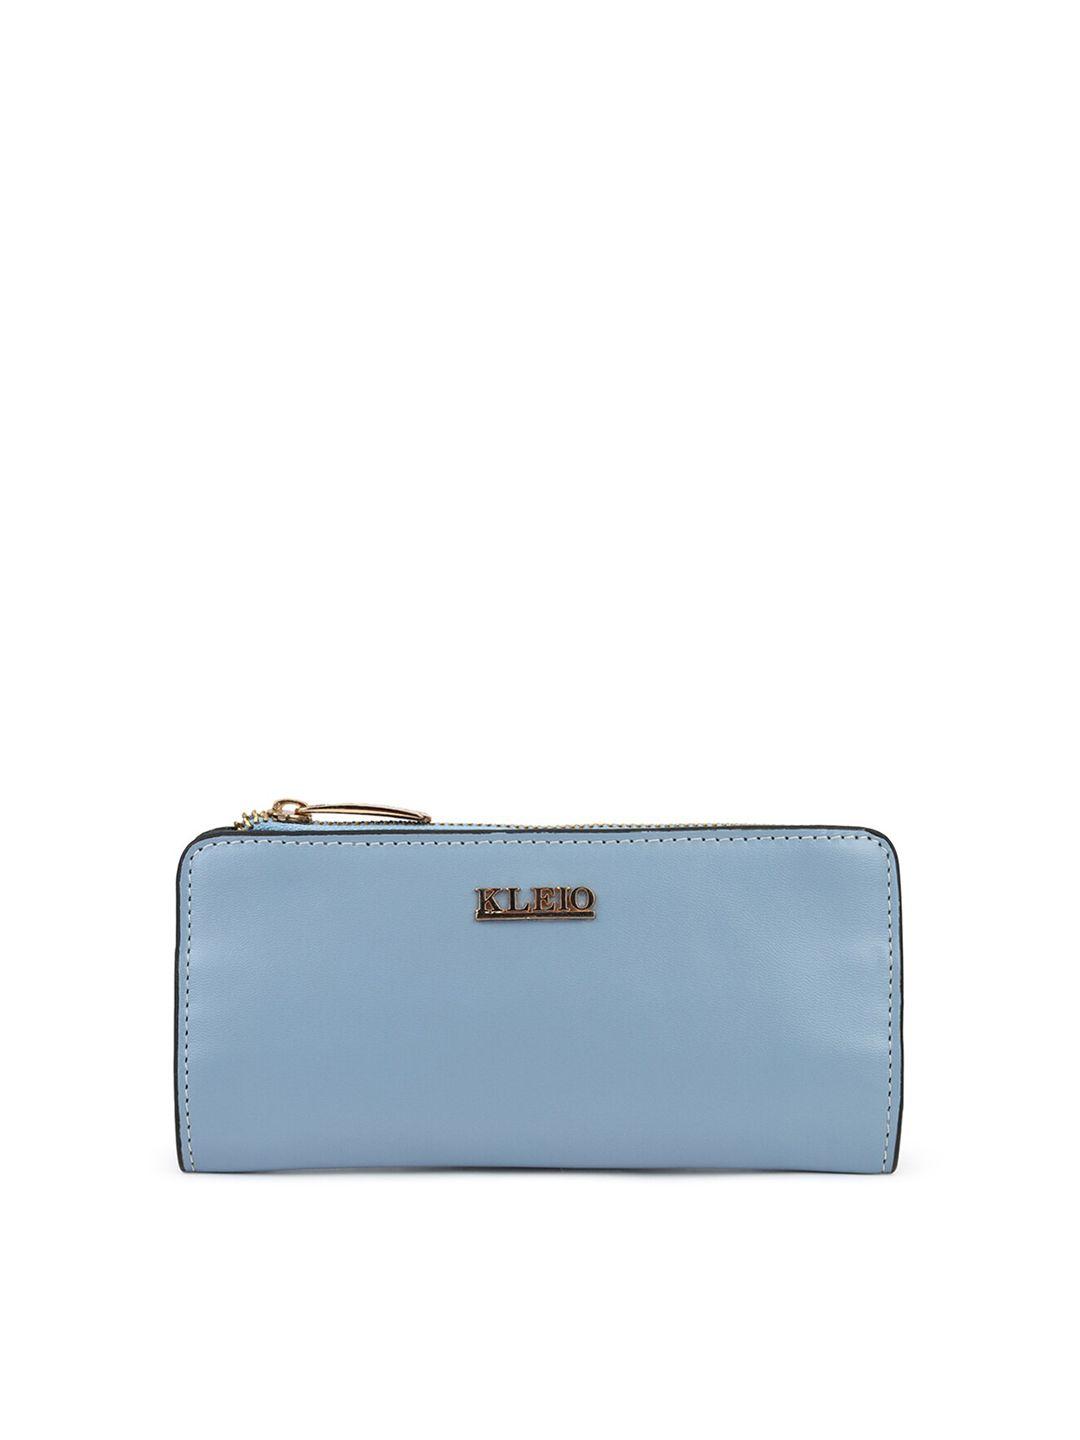 kleio women solid two fold wallet